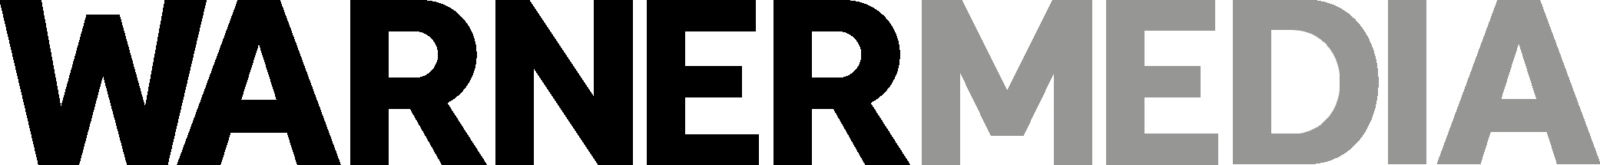 Warnermedia Logo